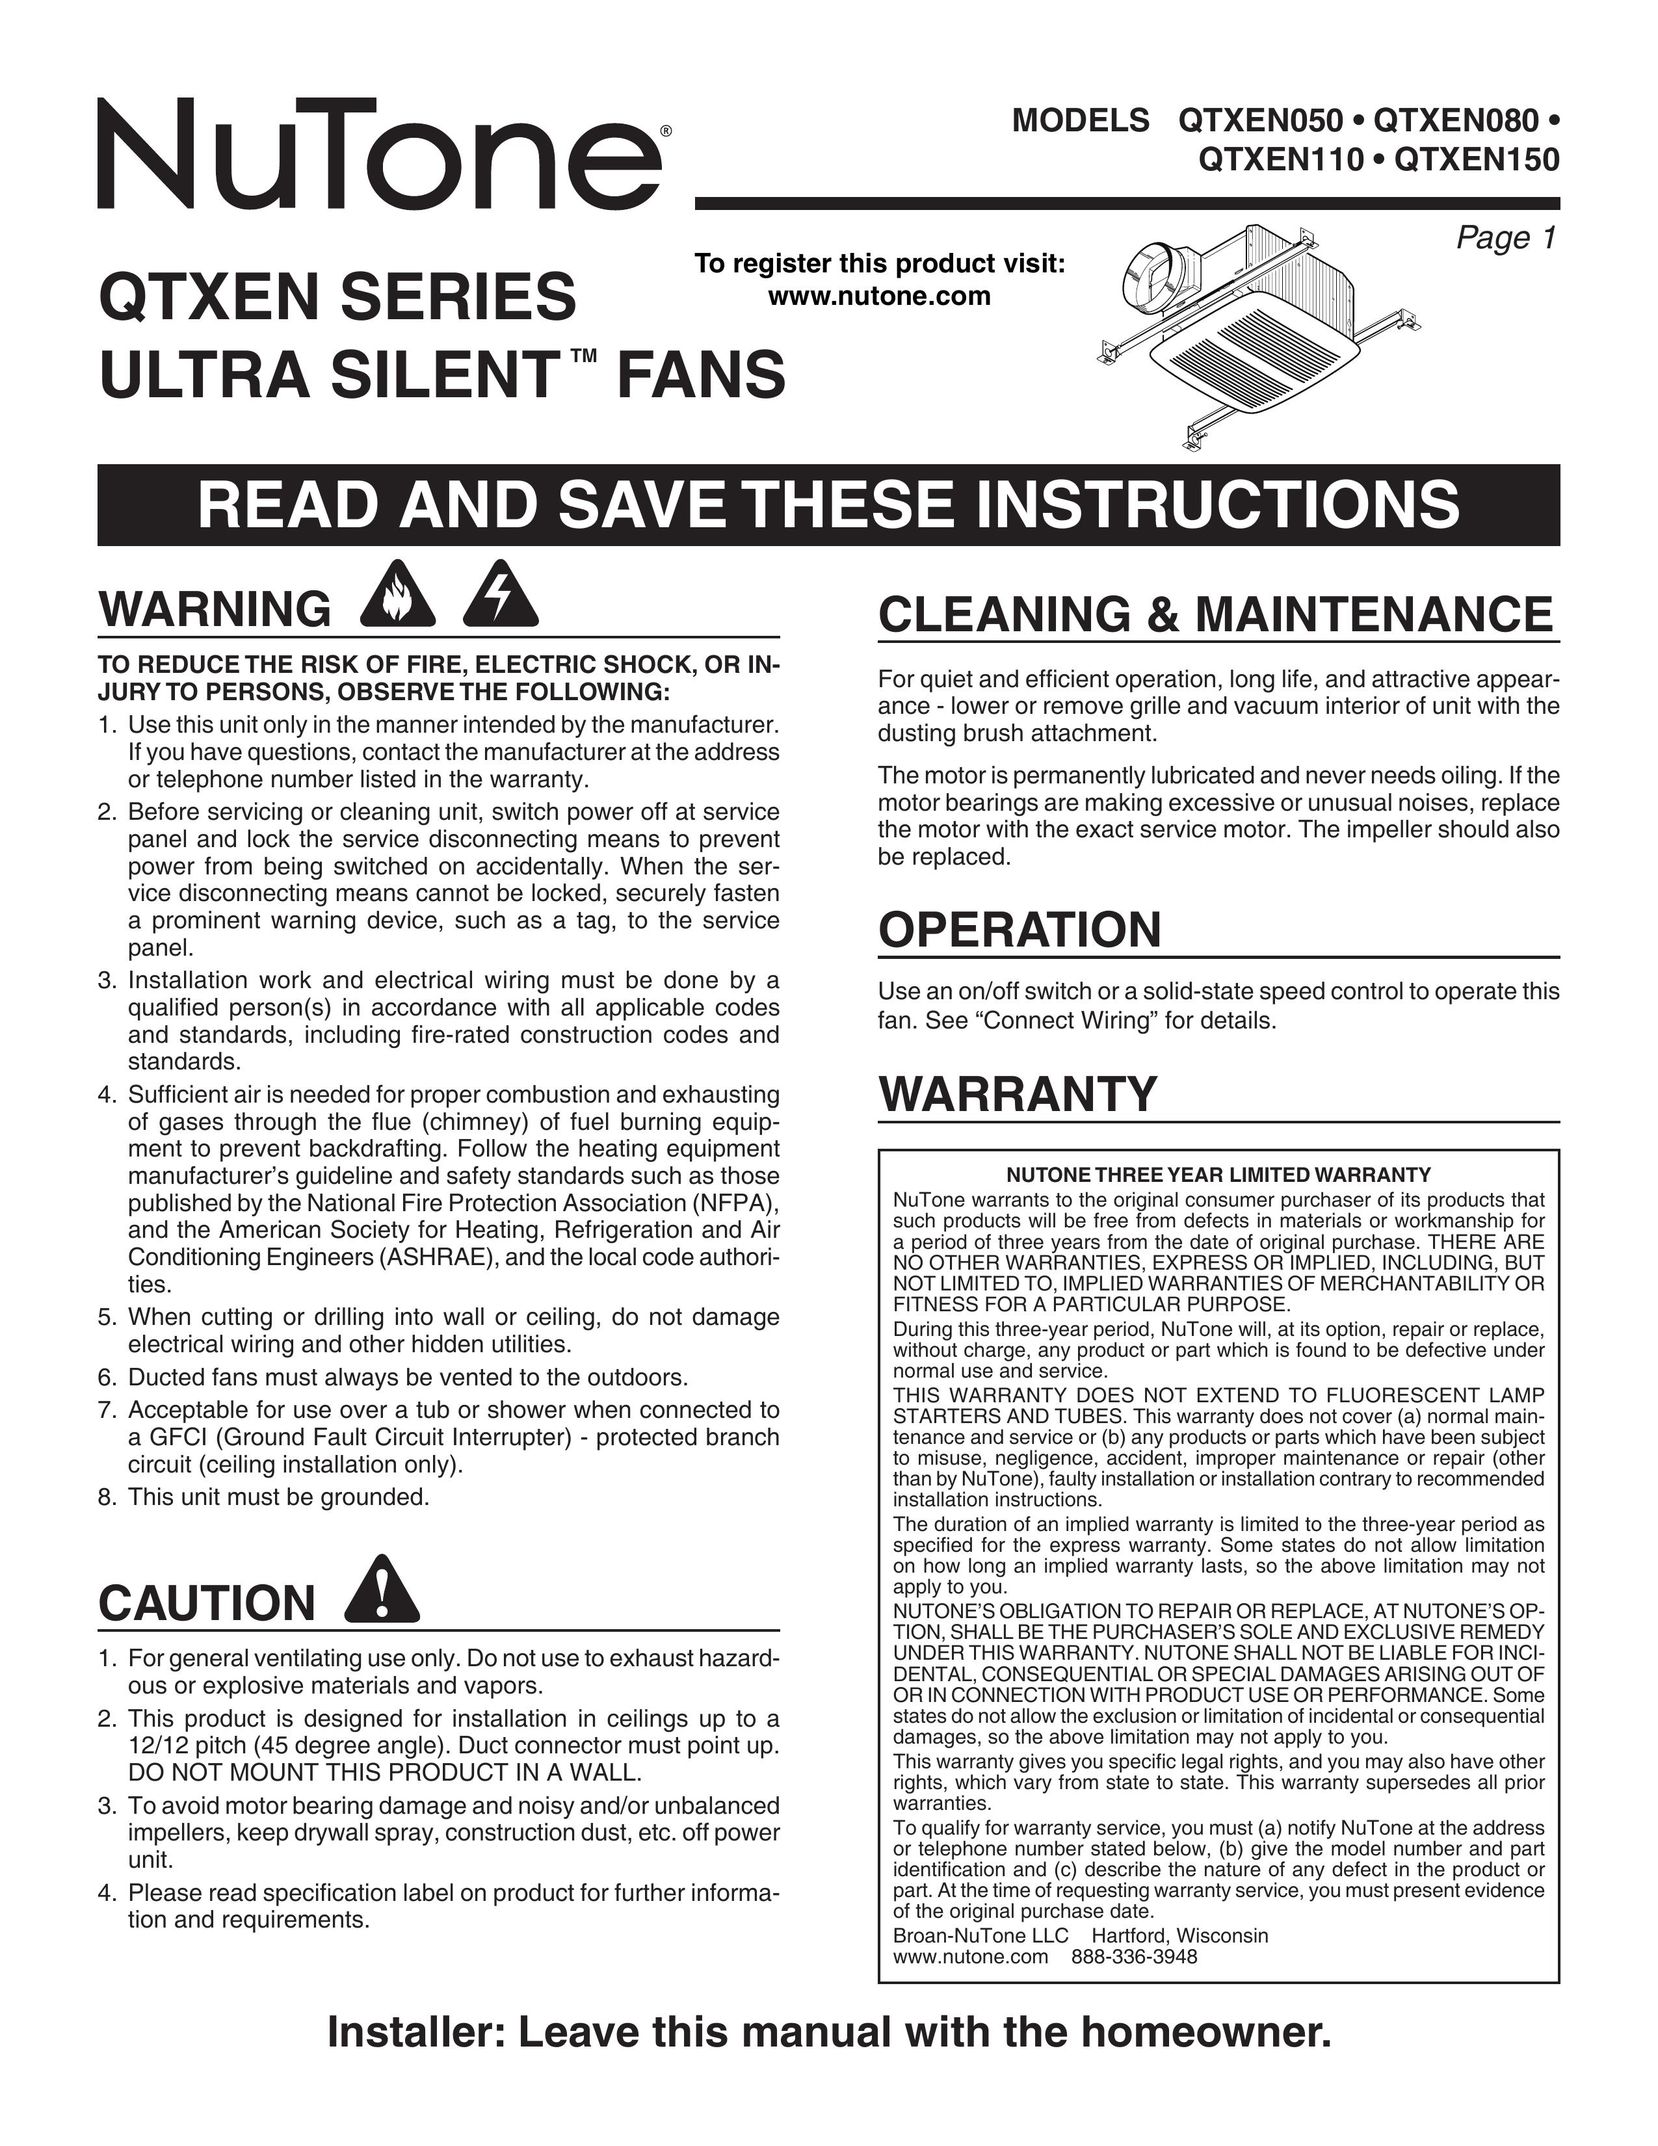 NuTone QTXEN080 Fan User Manual